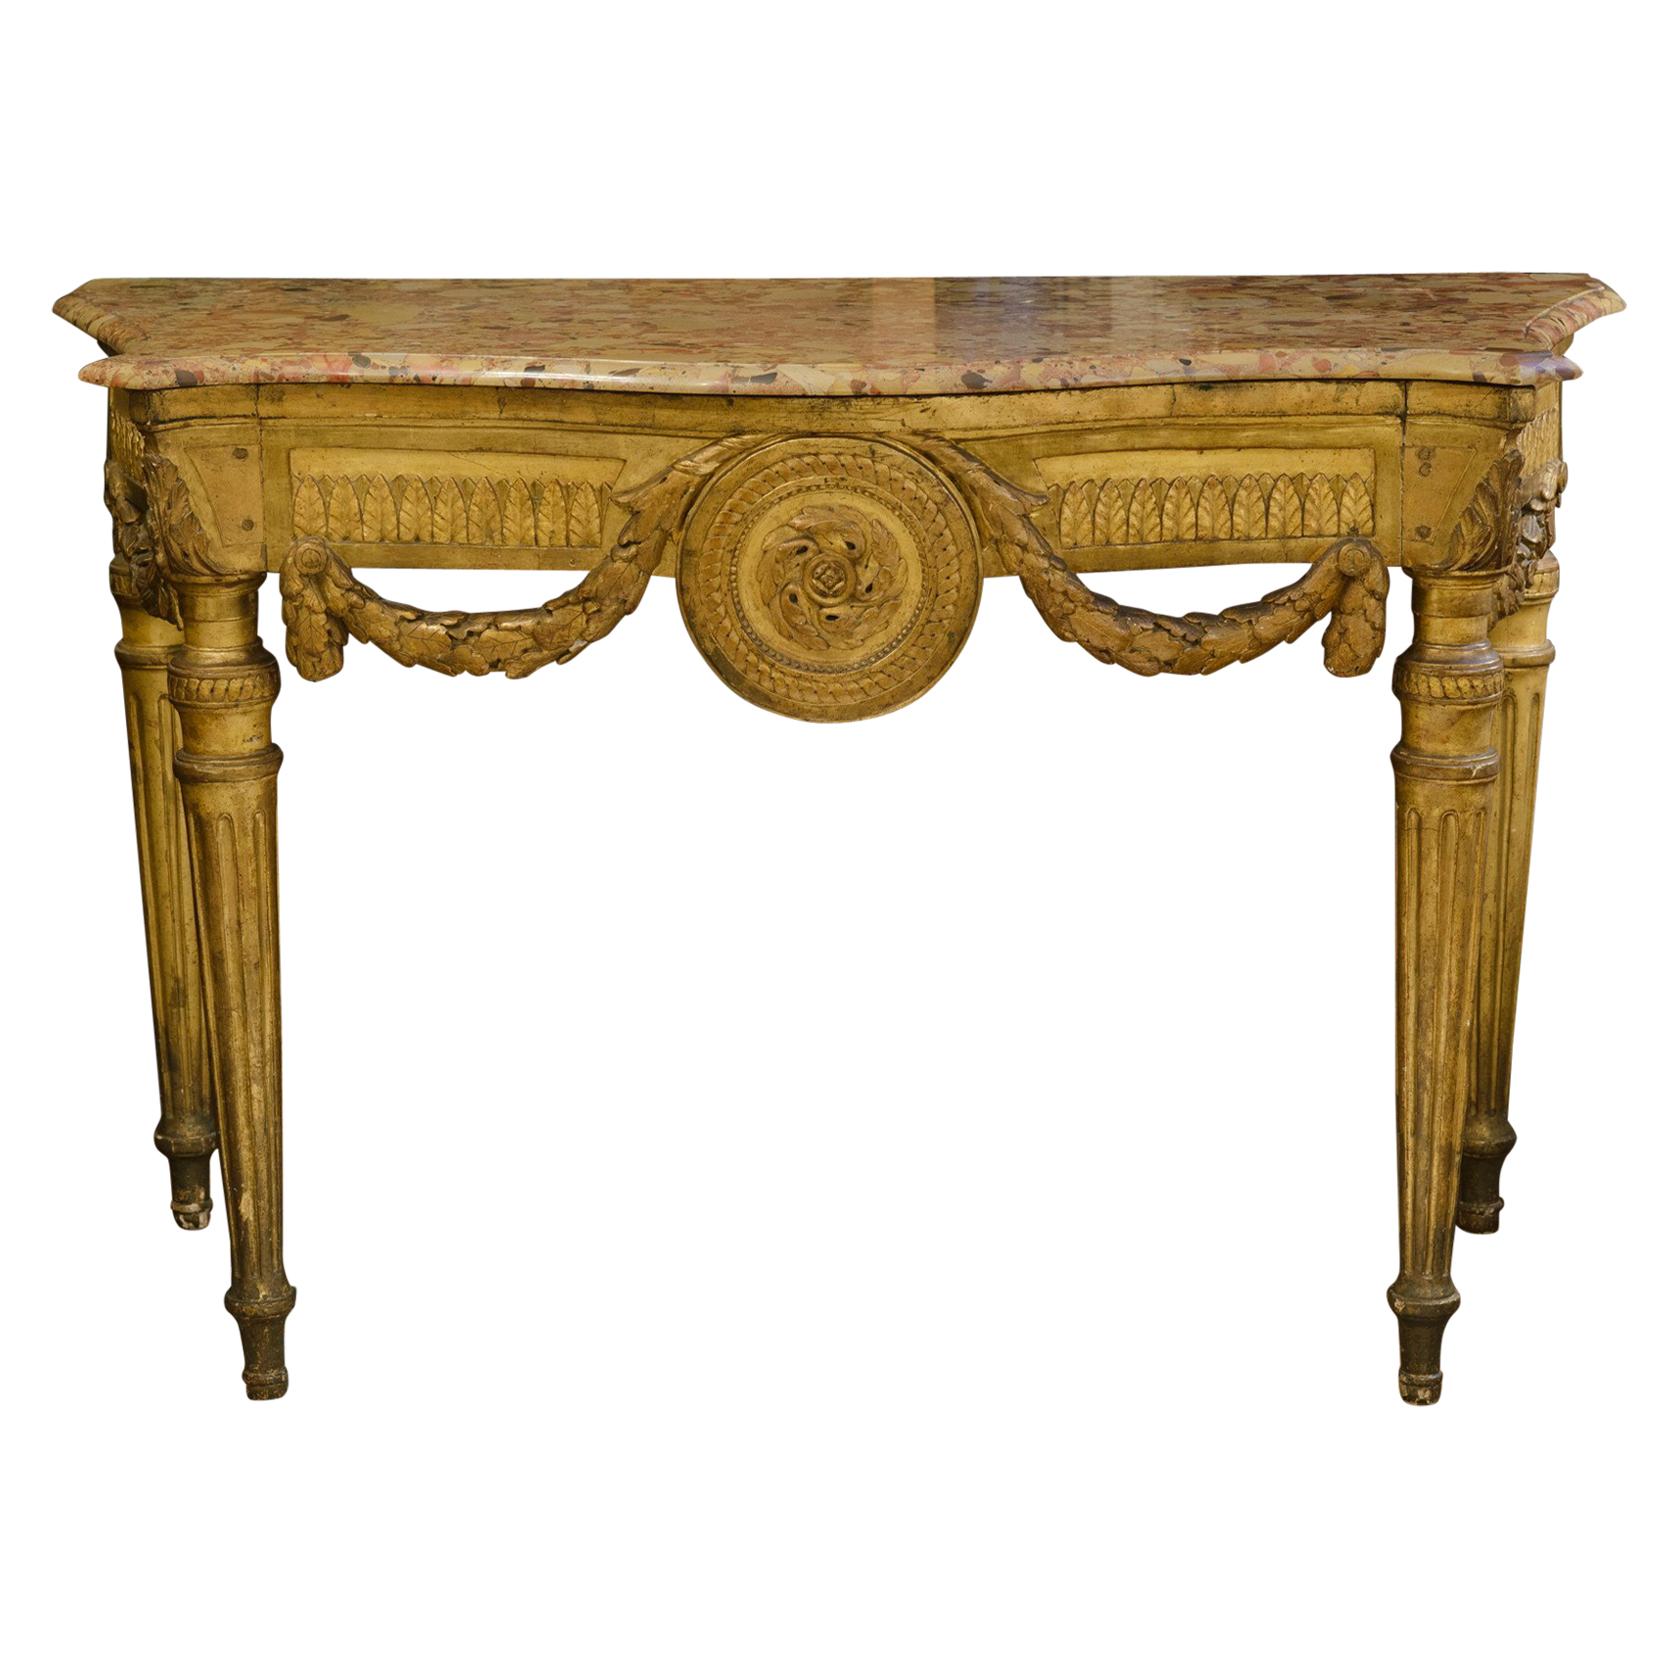 Neoklassizistische Konsole aus vergoldetem Holz, Louis XVI.-Stil